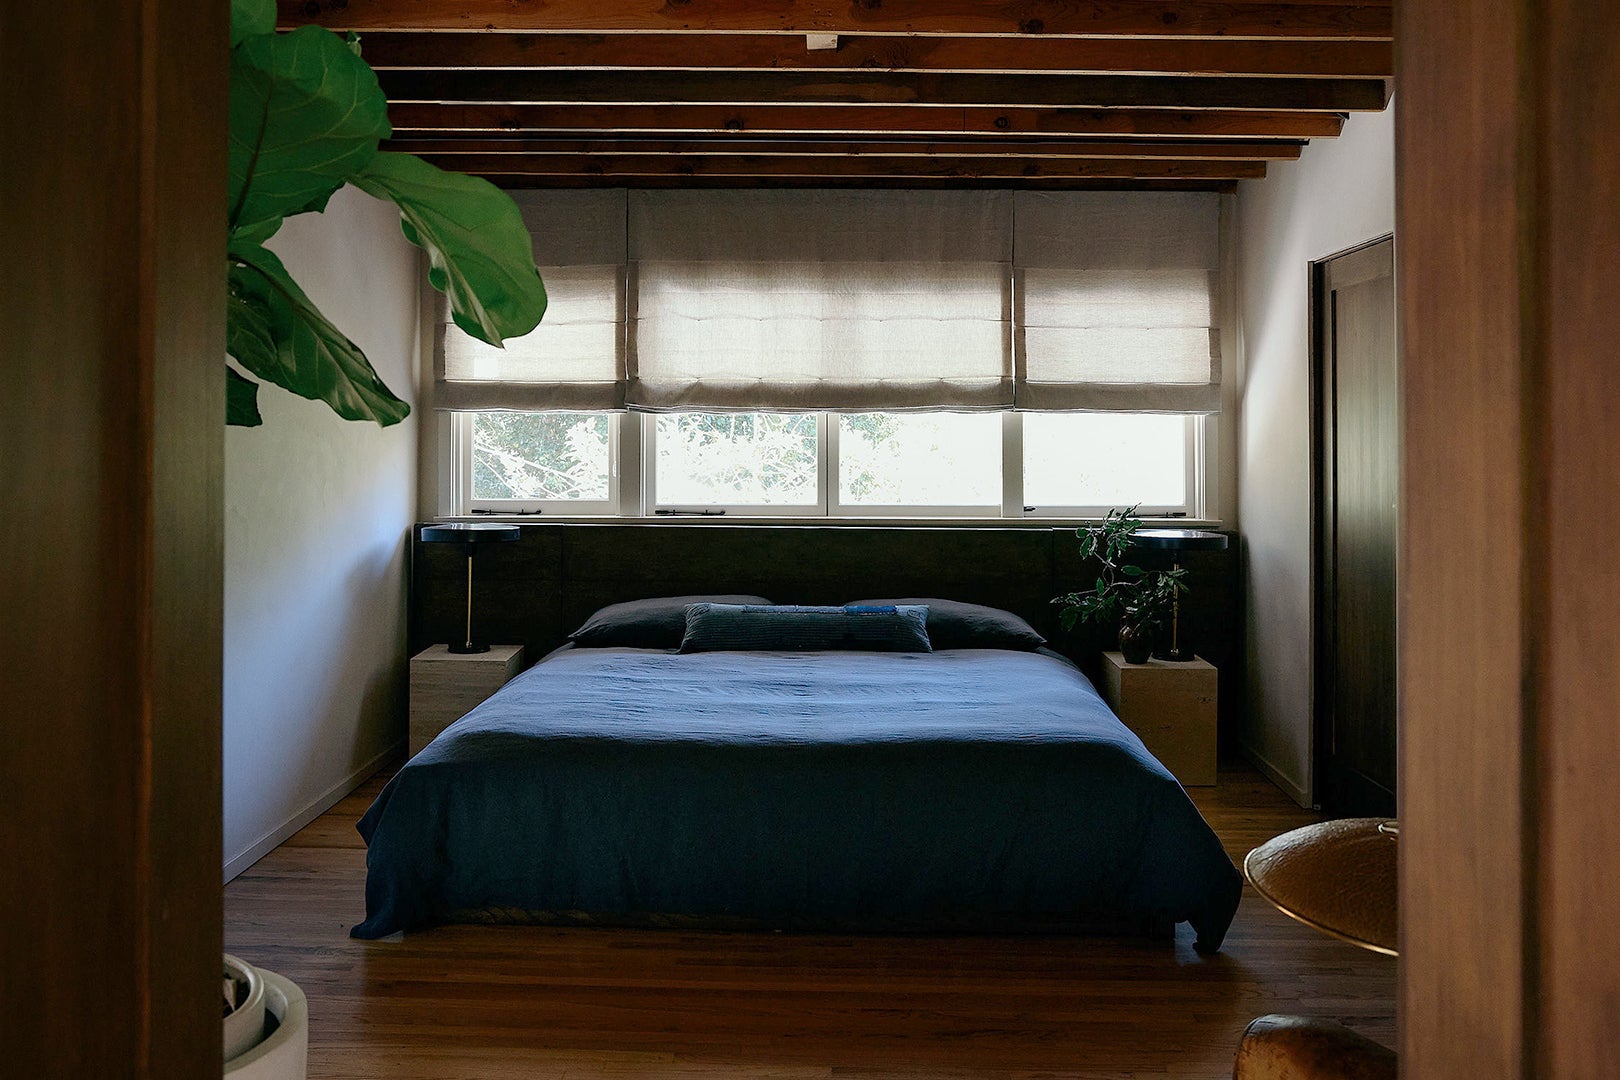 Bedroom with dark blue bedding and window behind bed